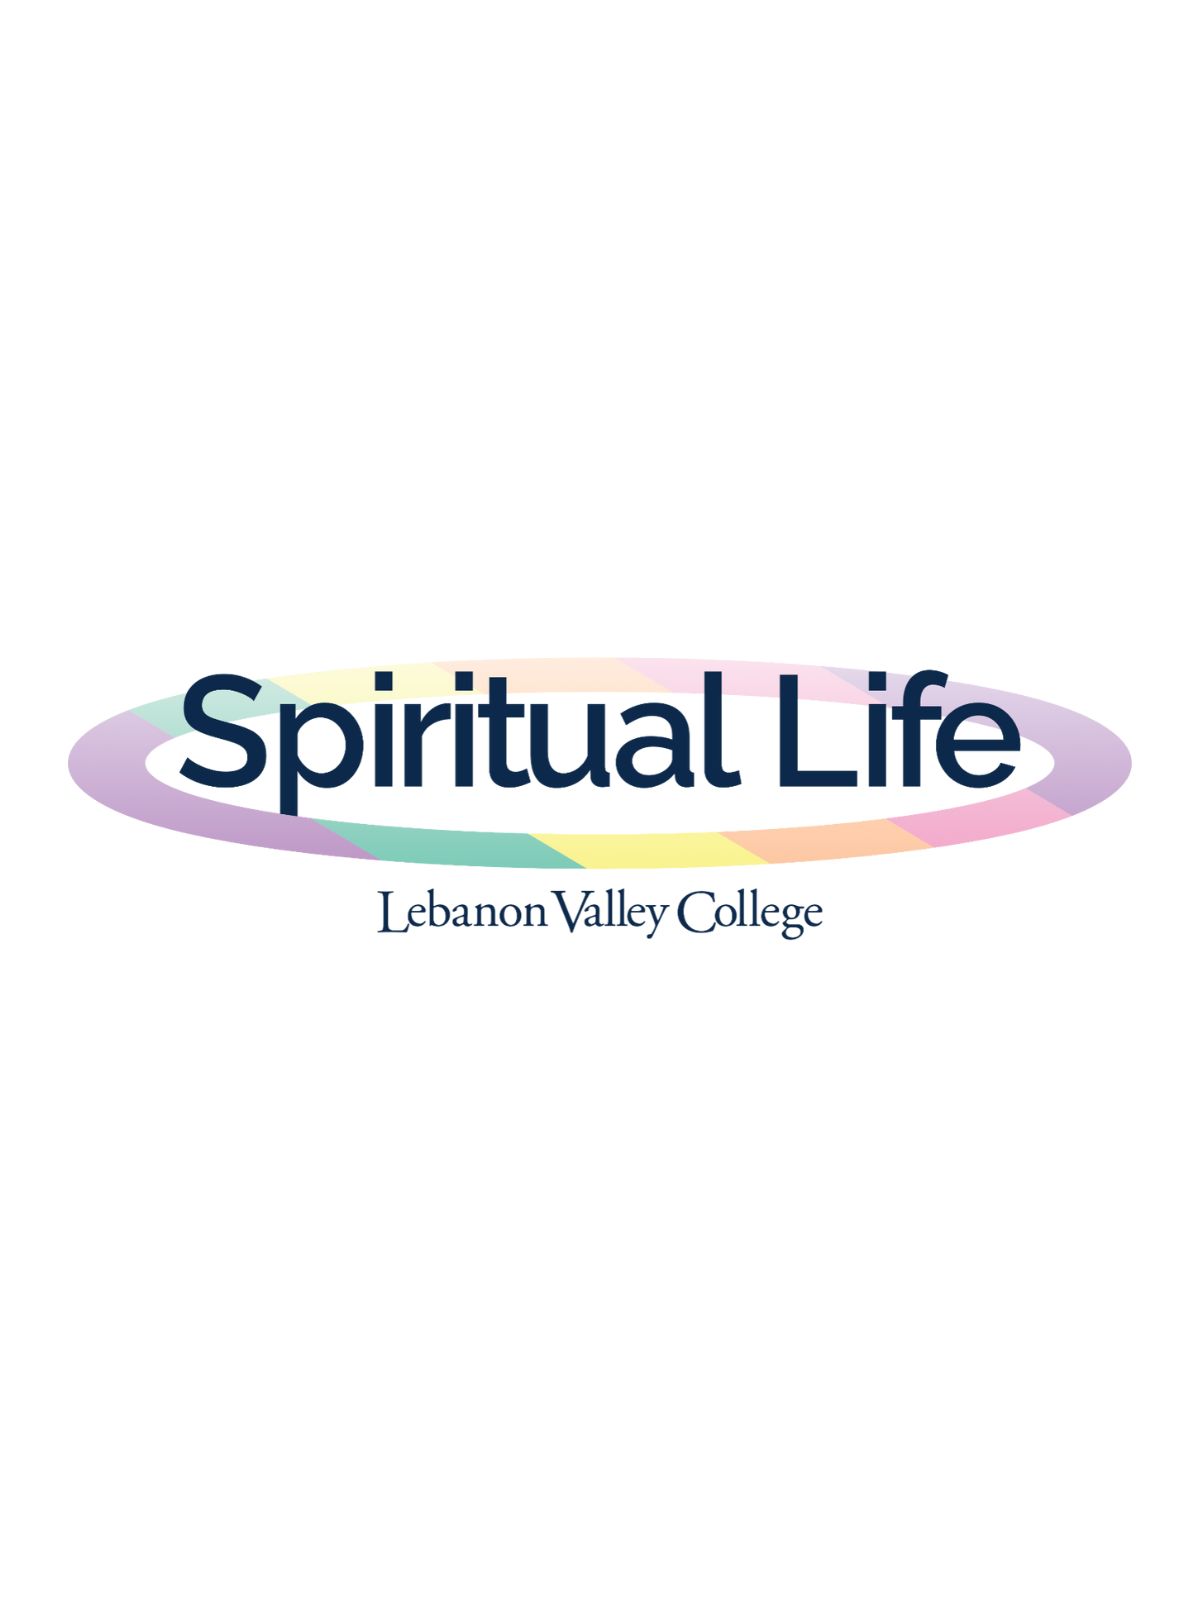 LVC Spiritual Life logo